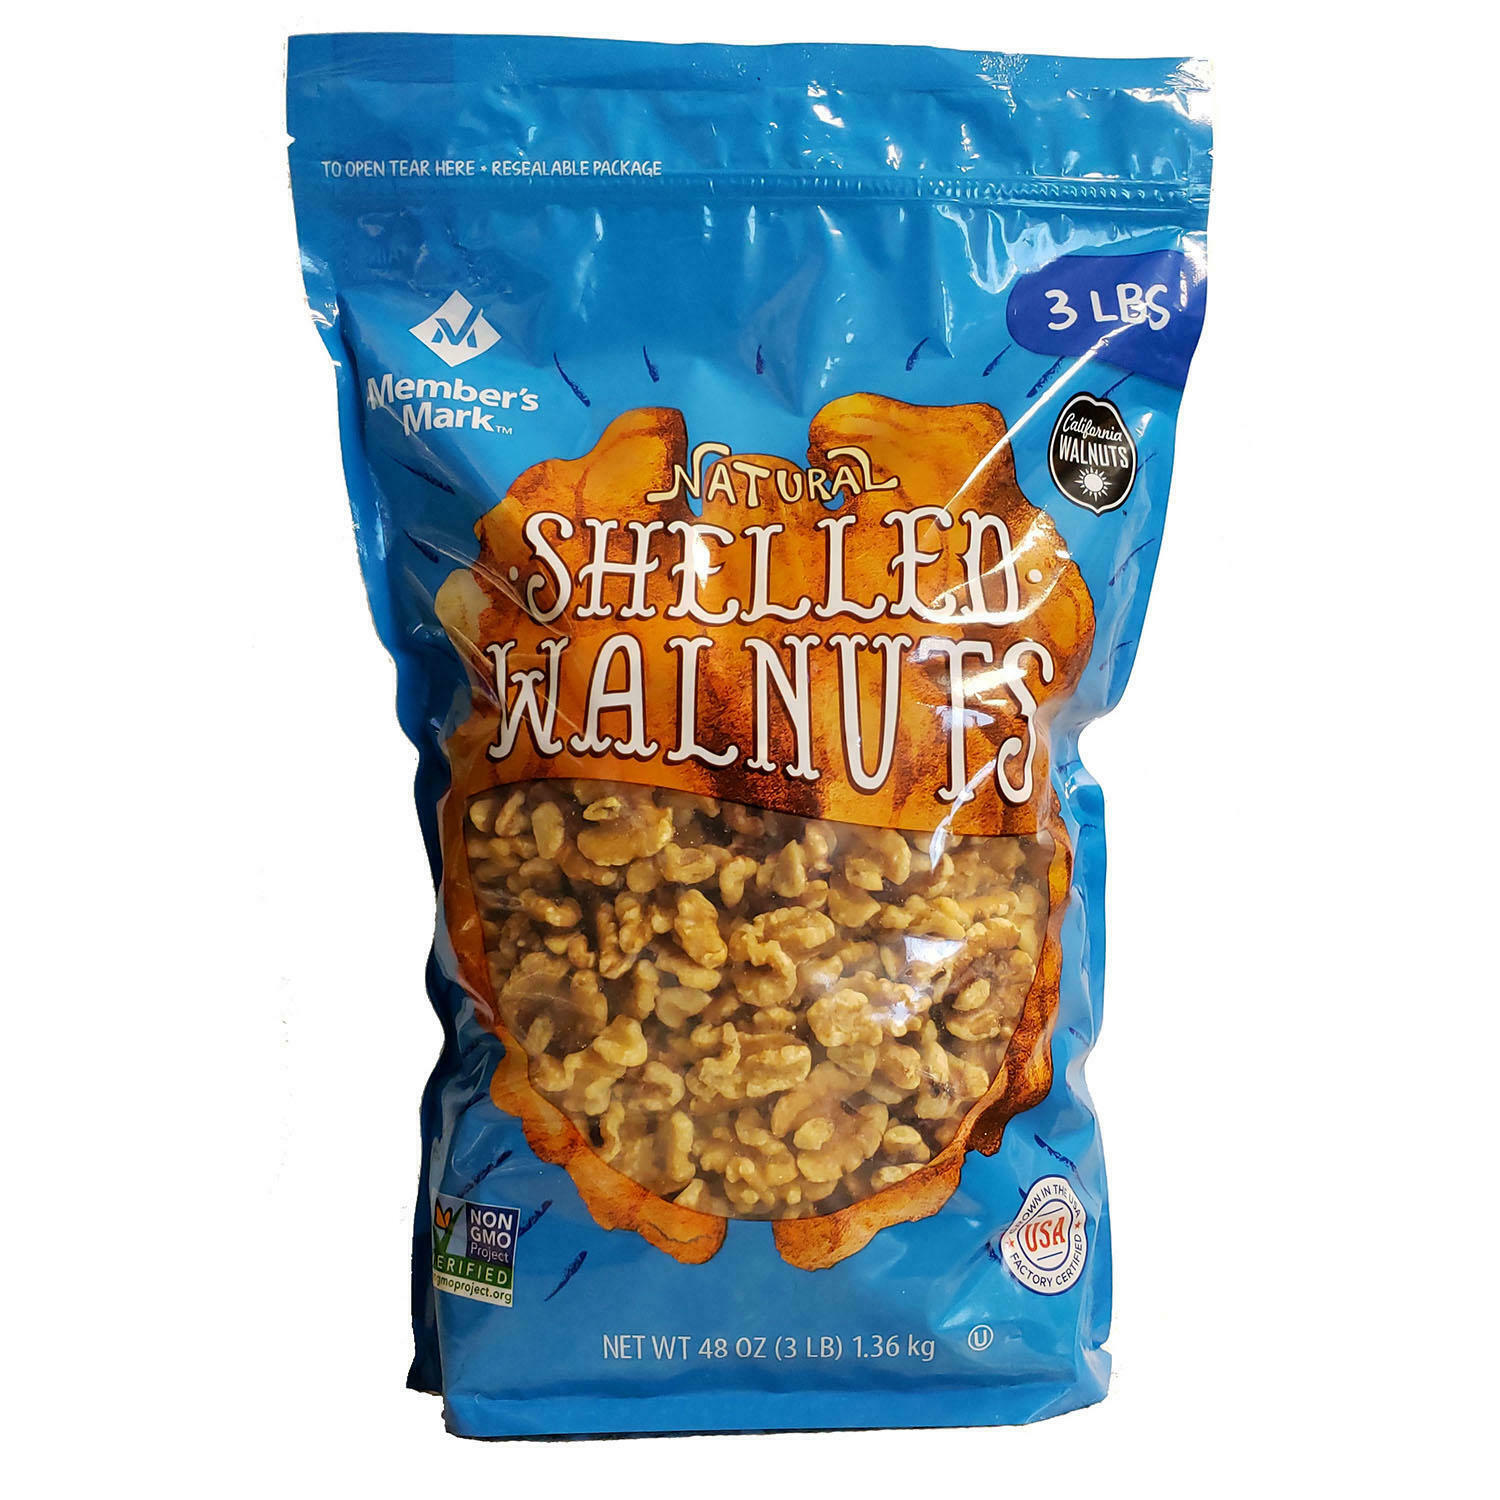 Member's Mark Natural Shelled Walnuts (3 lbs.) - Non GMO